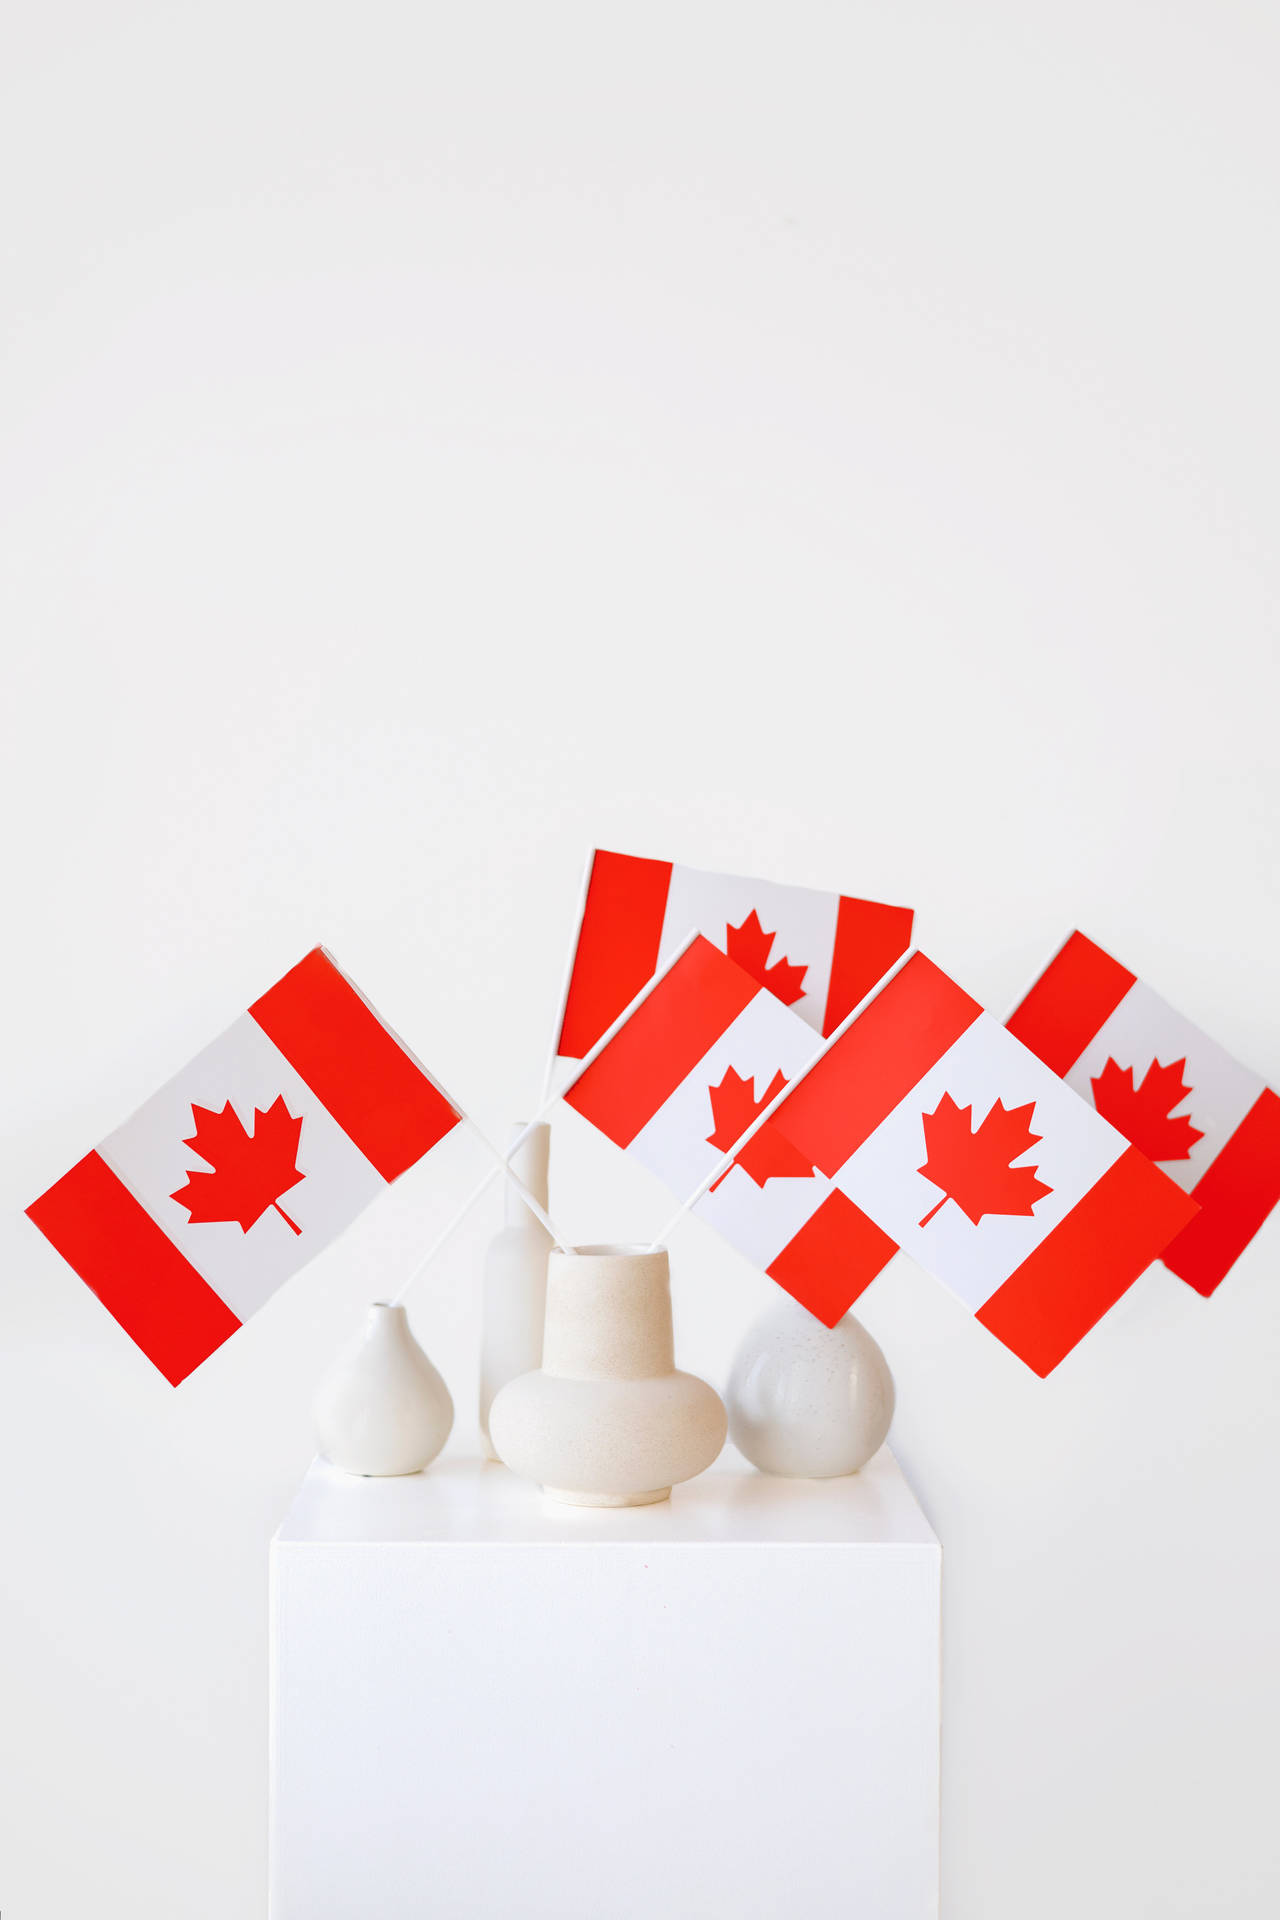 Canadian Flags Inside Vases Wallpaper